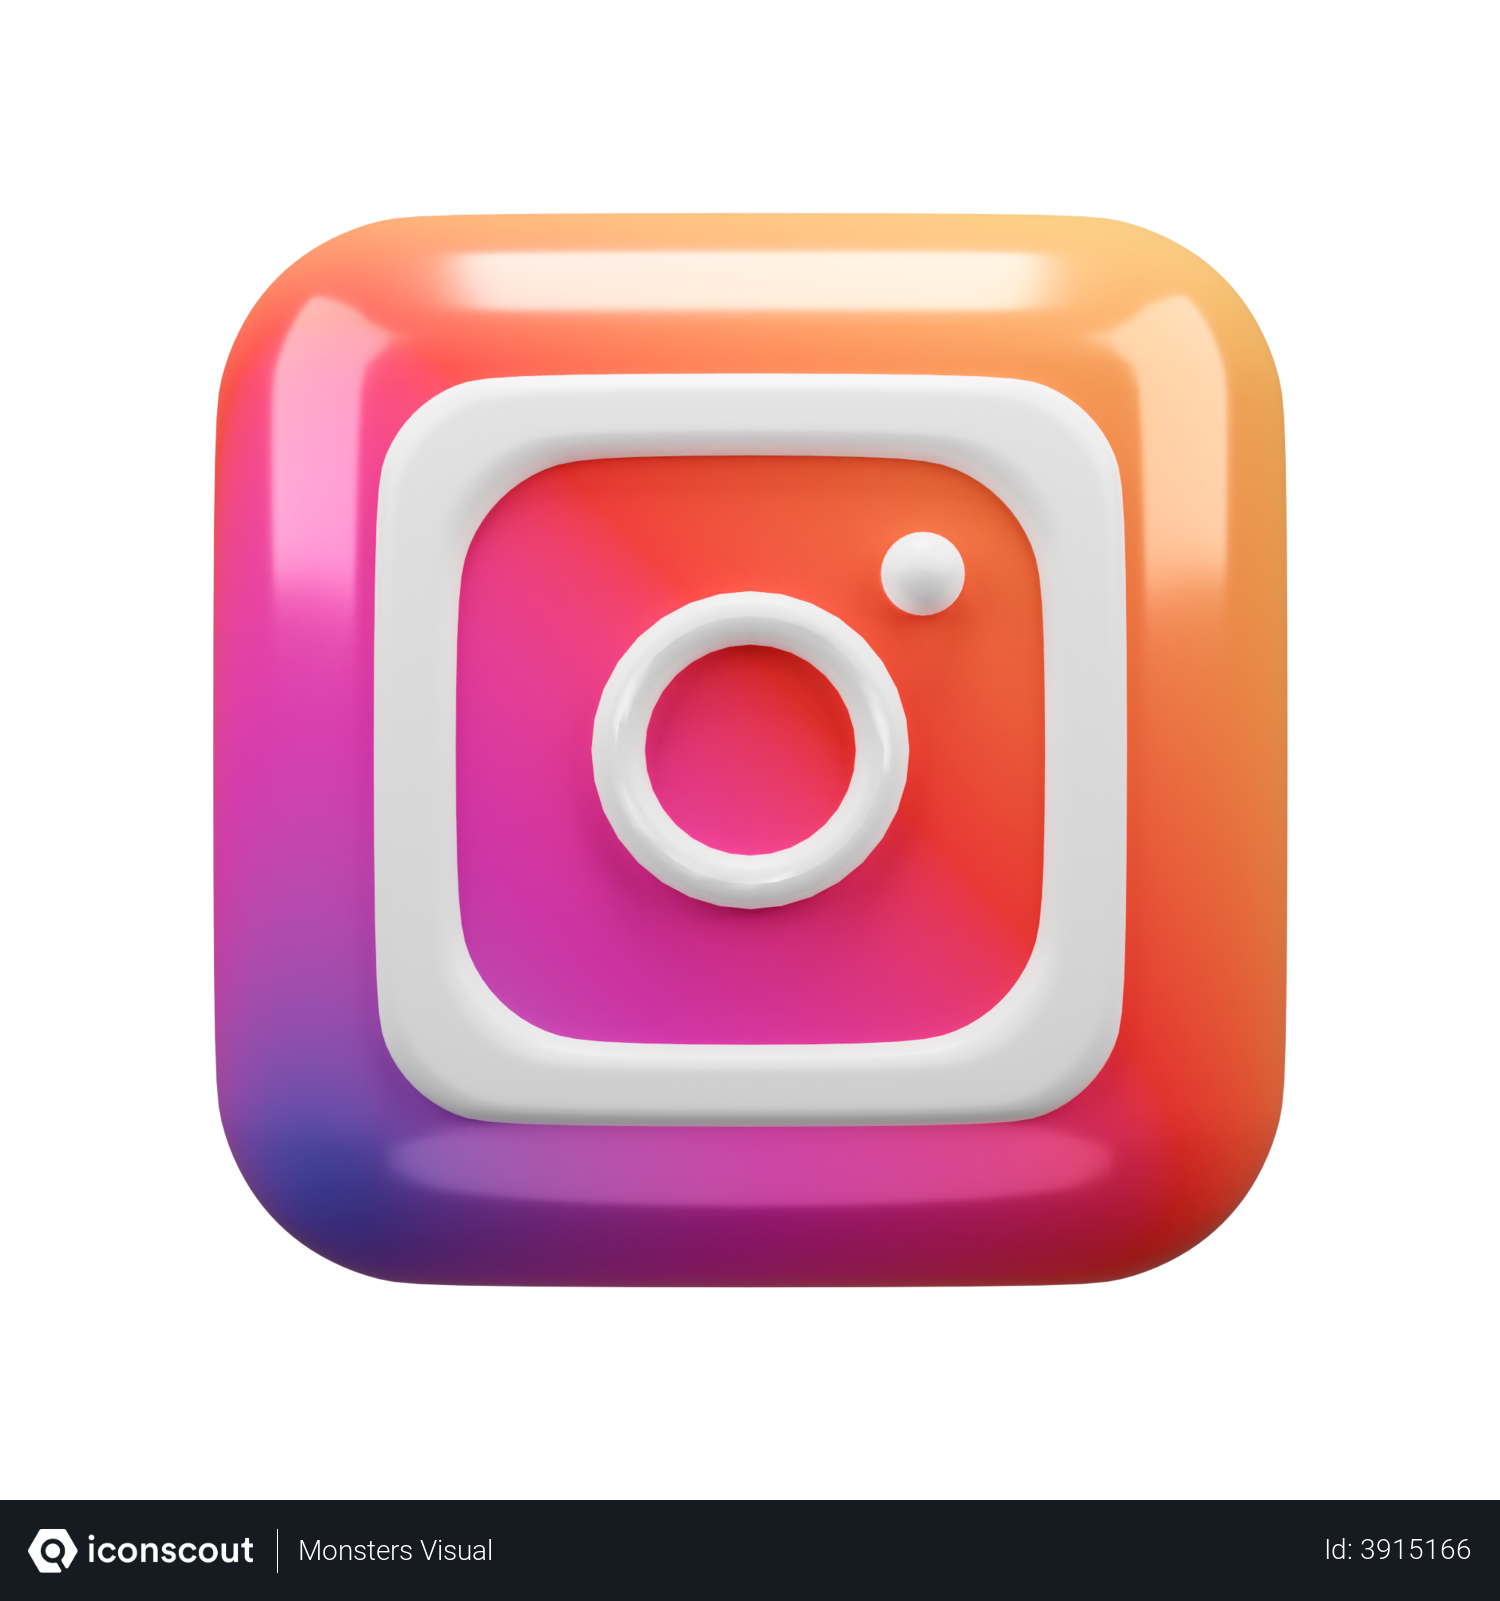 Instagram New Logo Explanation